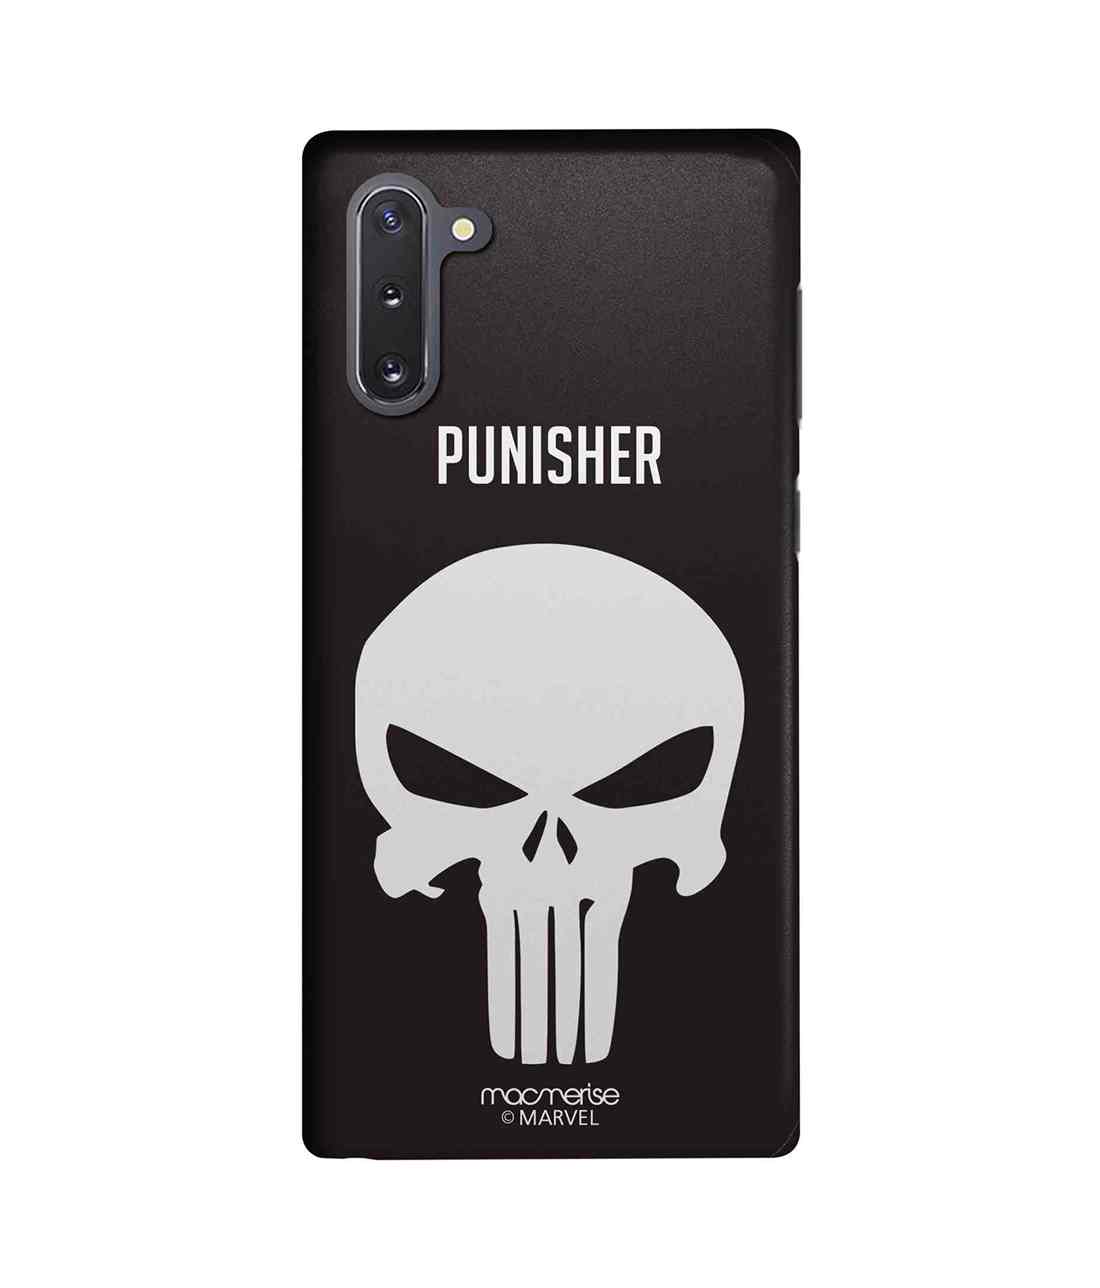 Punisher Symbol - Sleek Phone Case for Samsung Note10